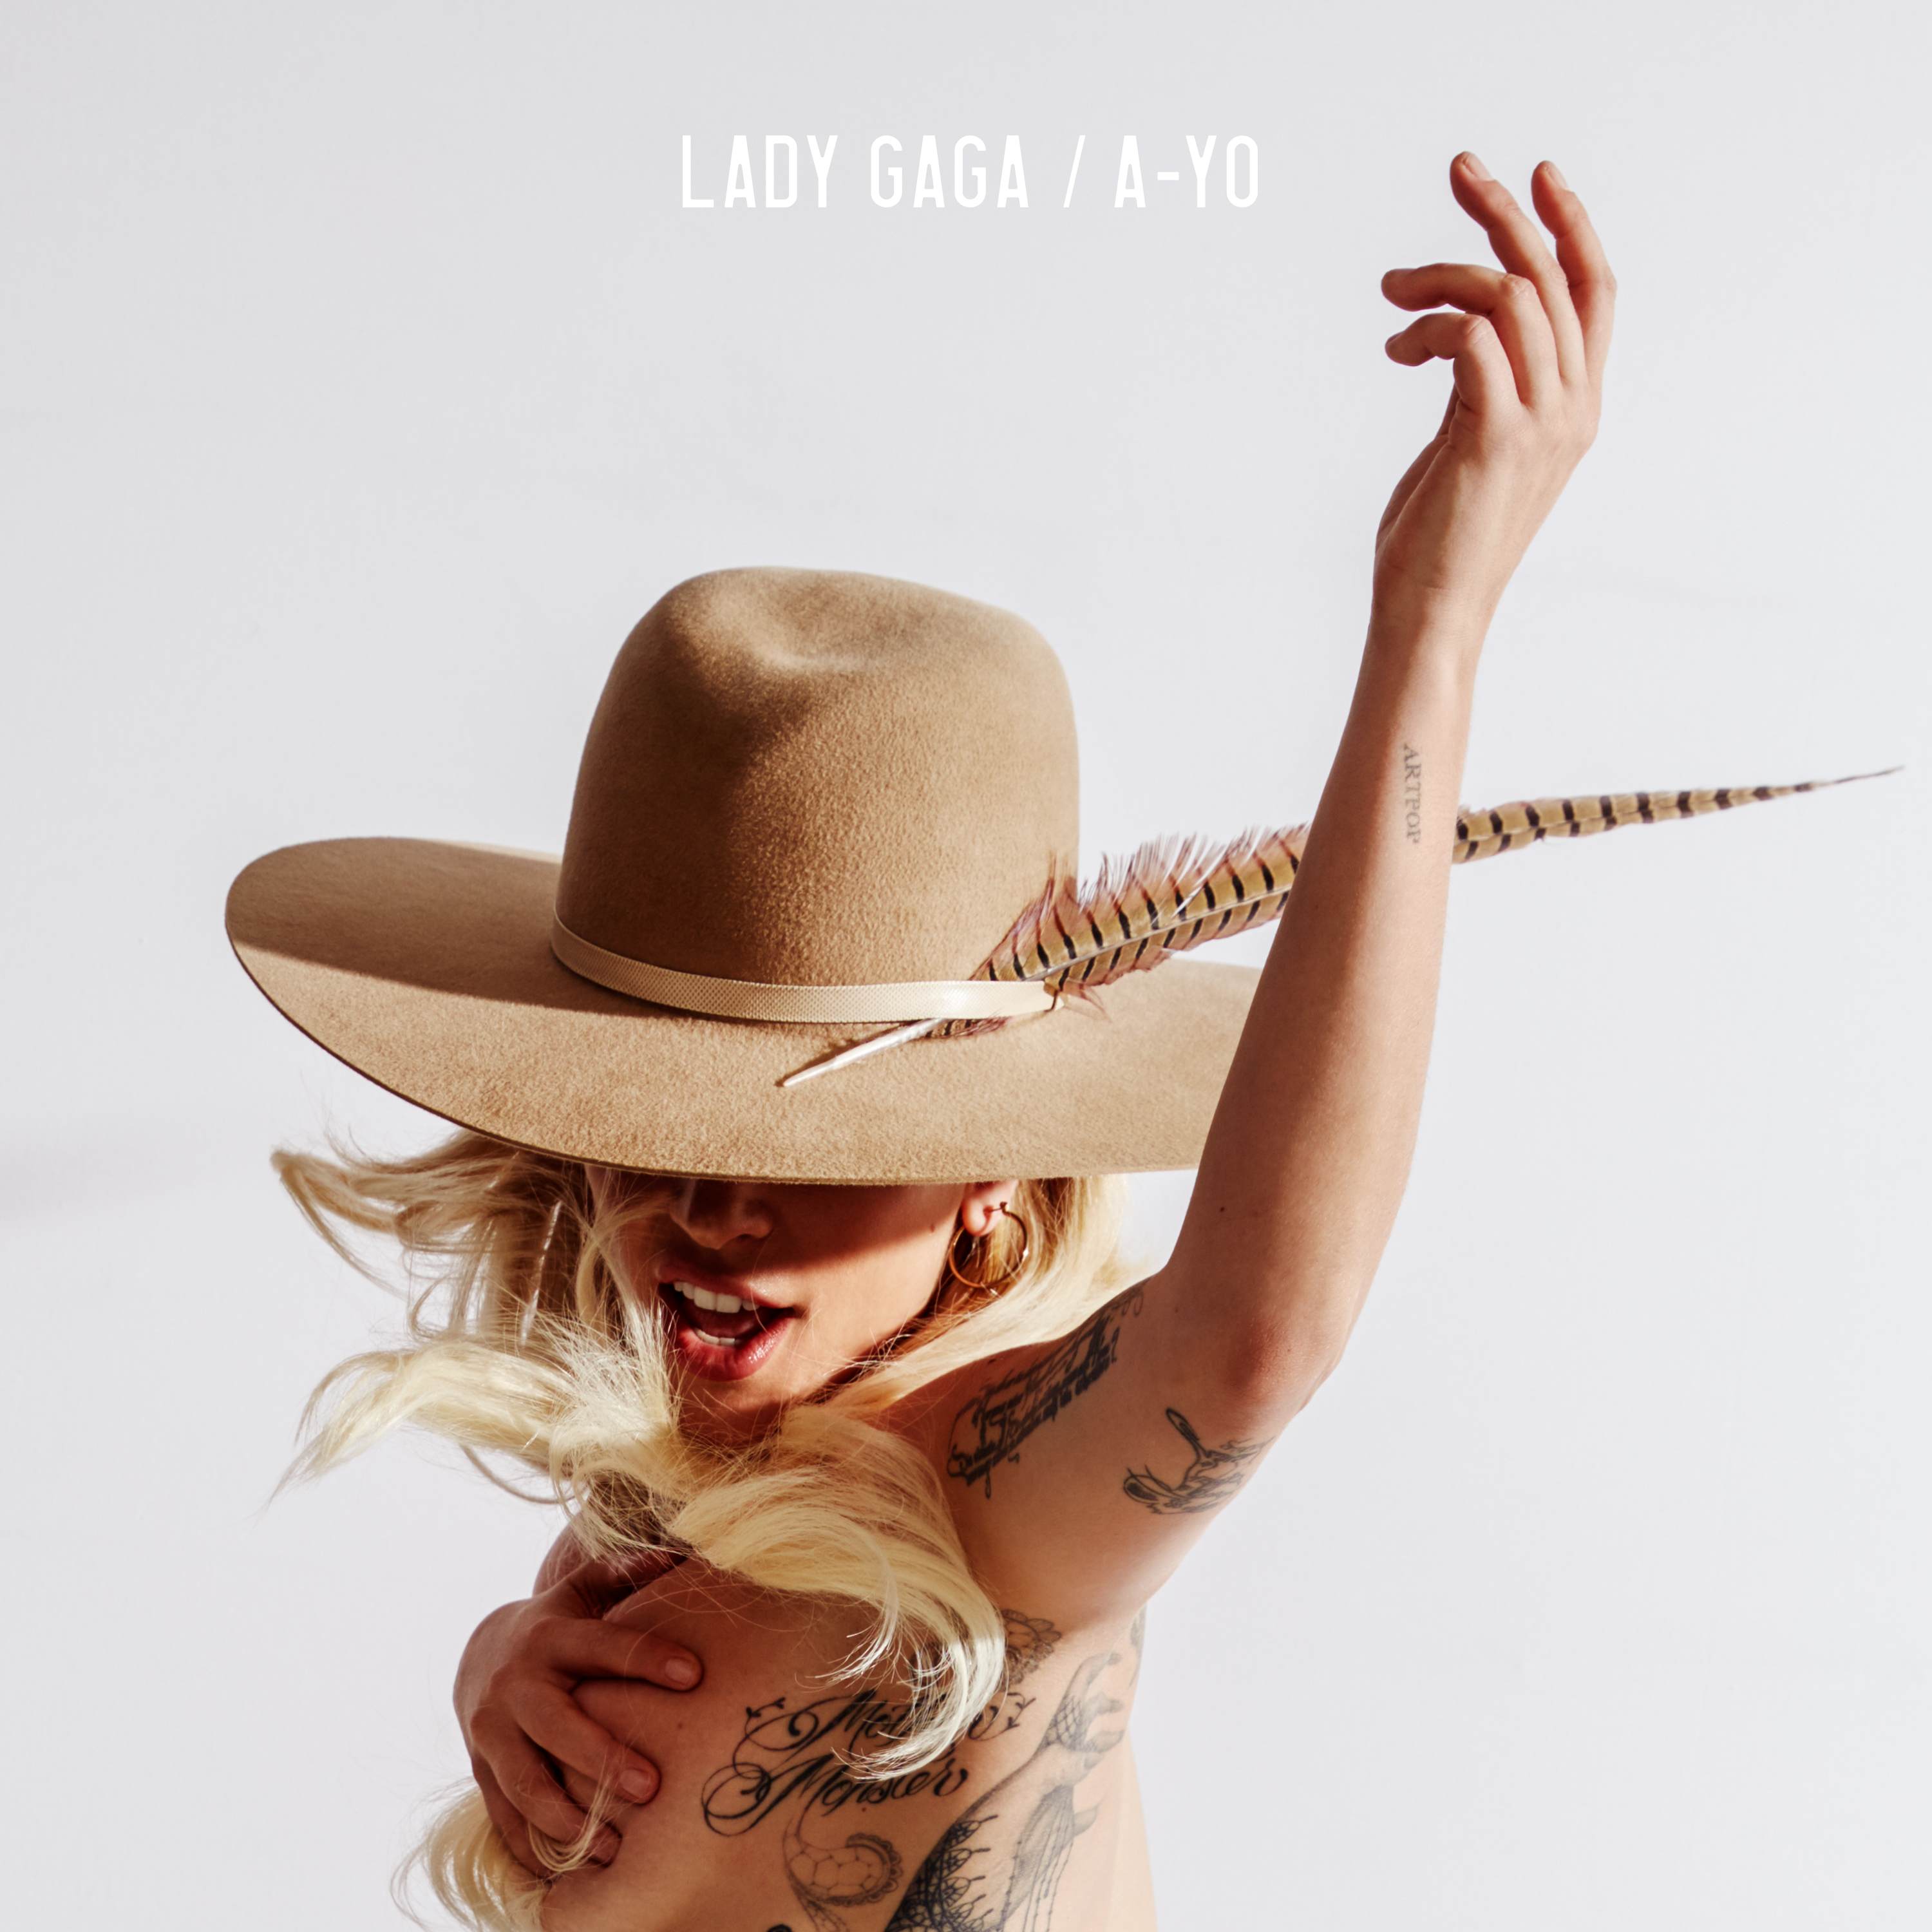 What Lady Gaga's Free Woman Song Lyrics Really Mean